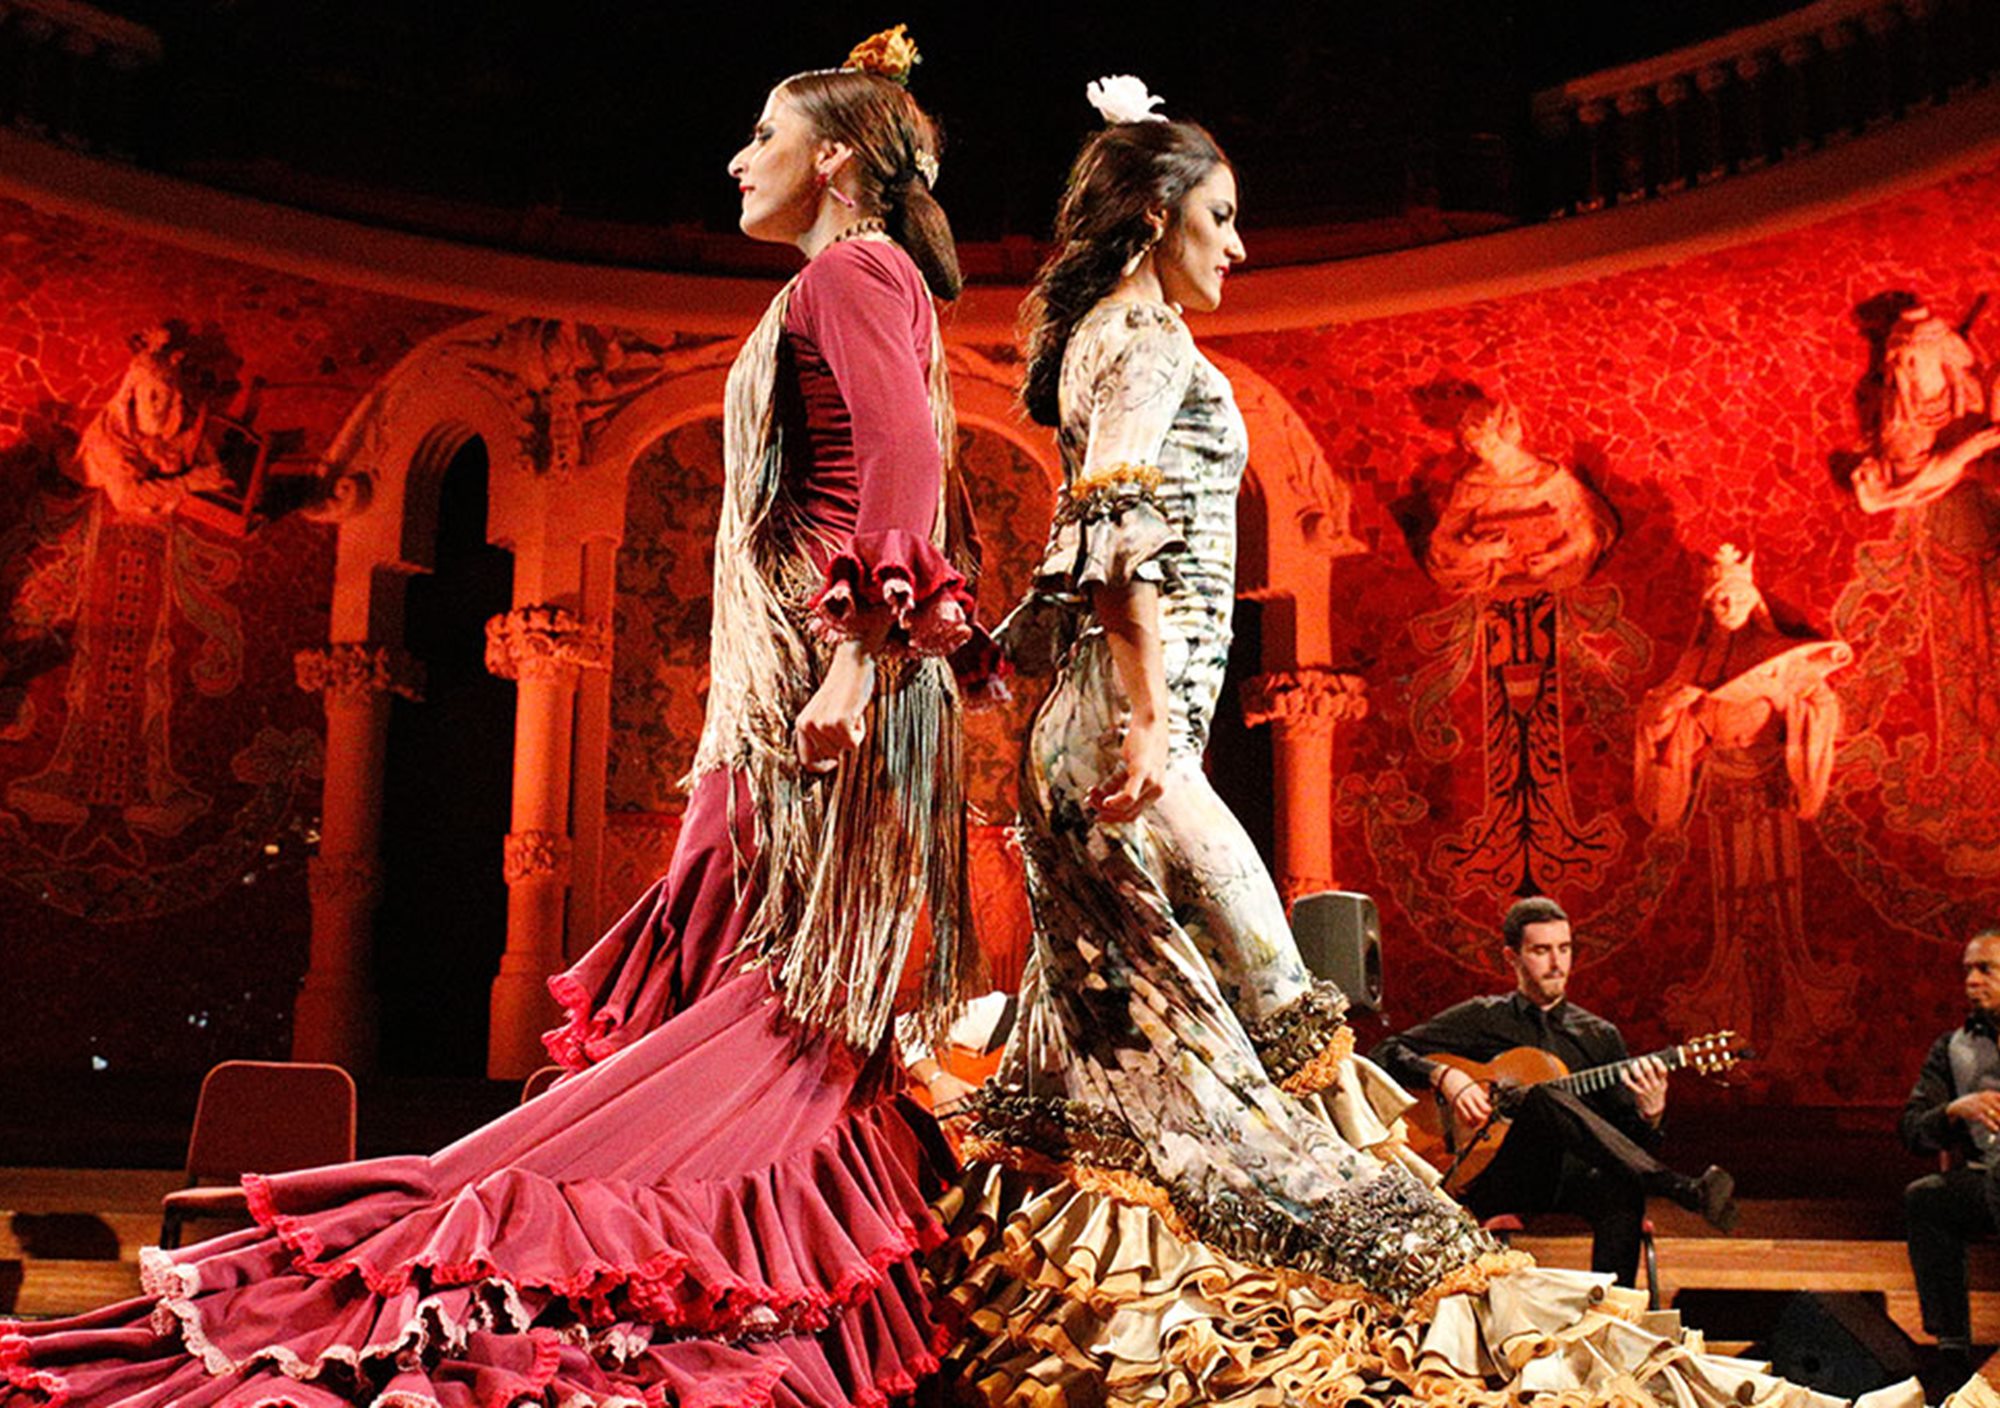 buchen online tickets karten eintrittskarten Fahrkarte Show Gran Gala Flamenco in Teatre Poliorama barcelona